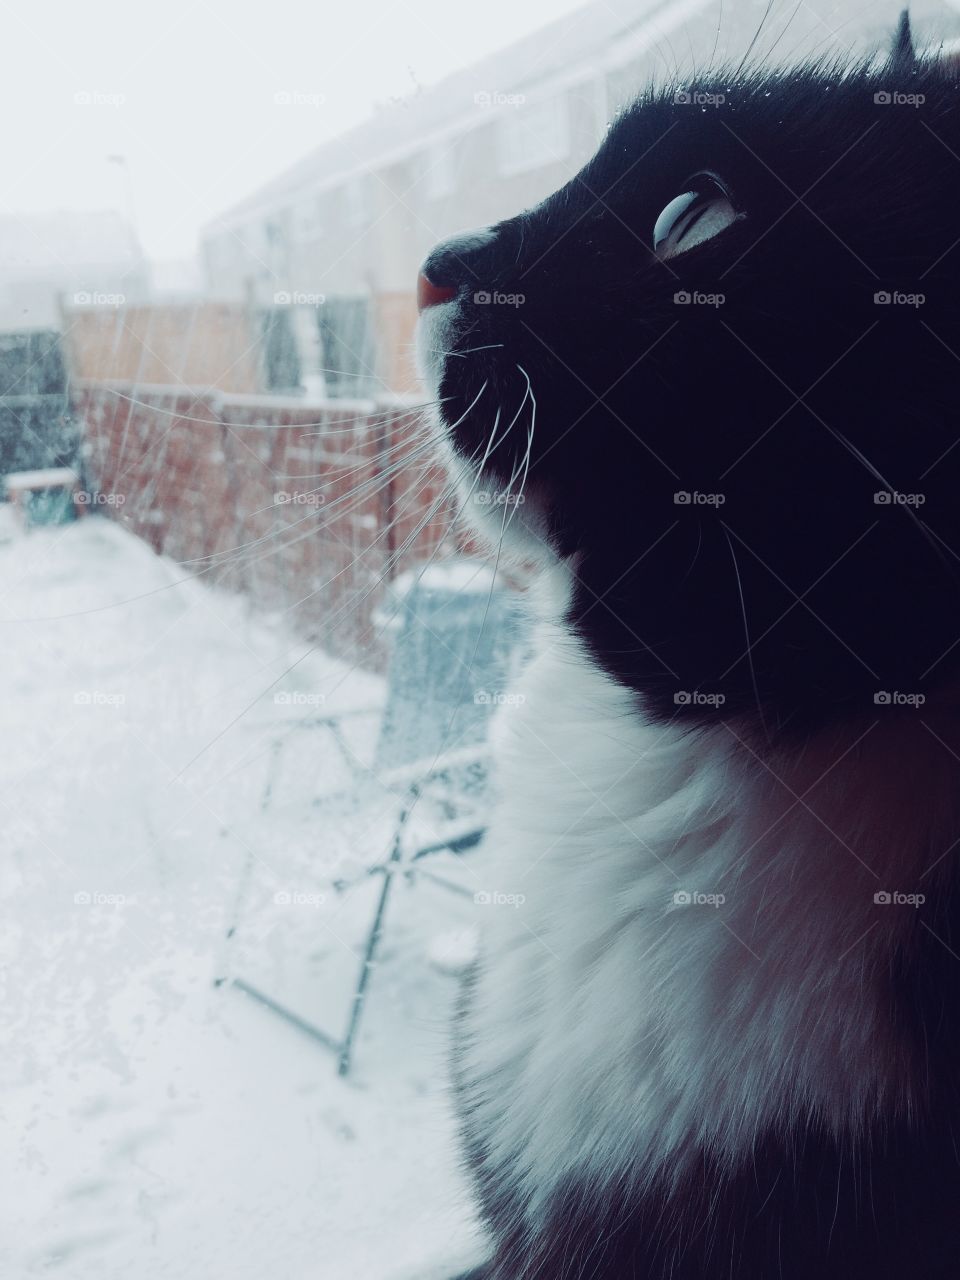 Cat enjoying the snowflakes!